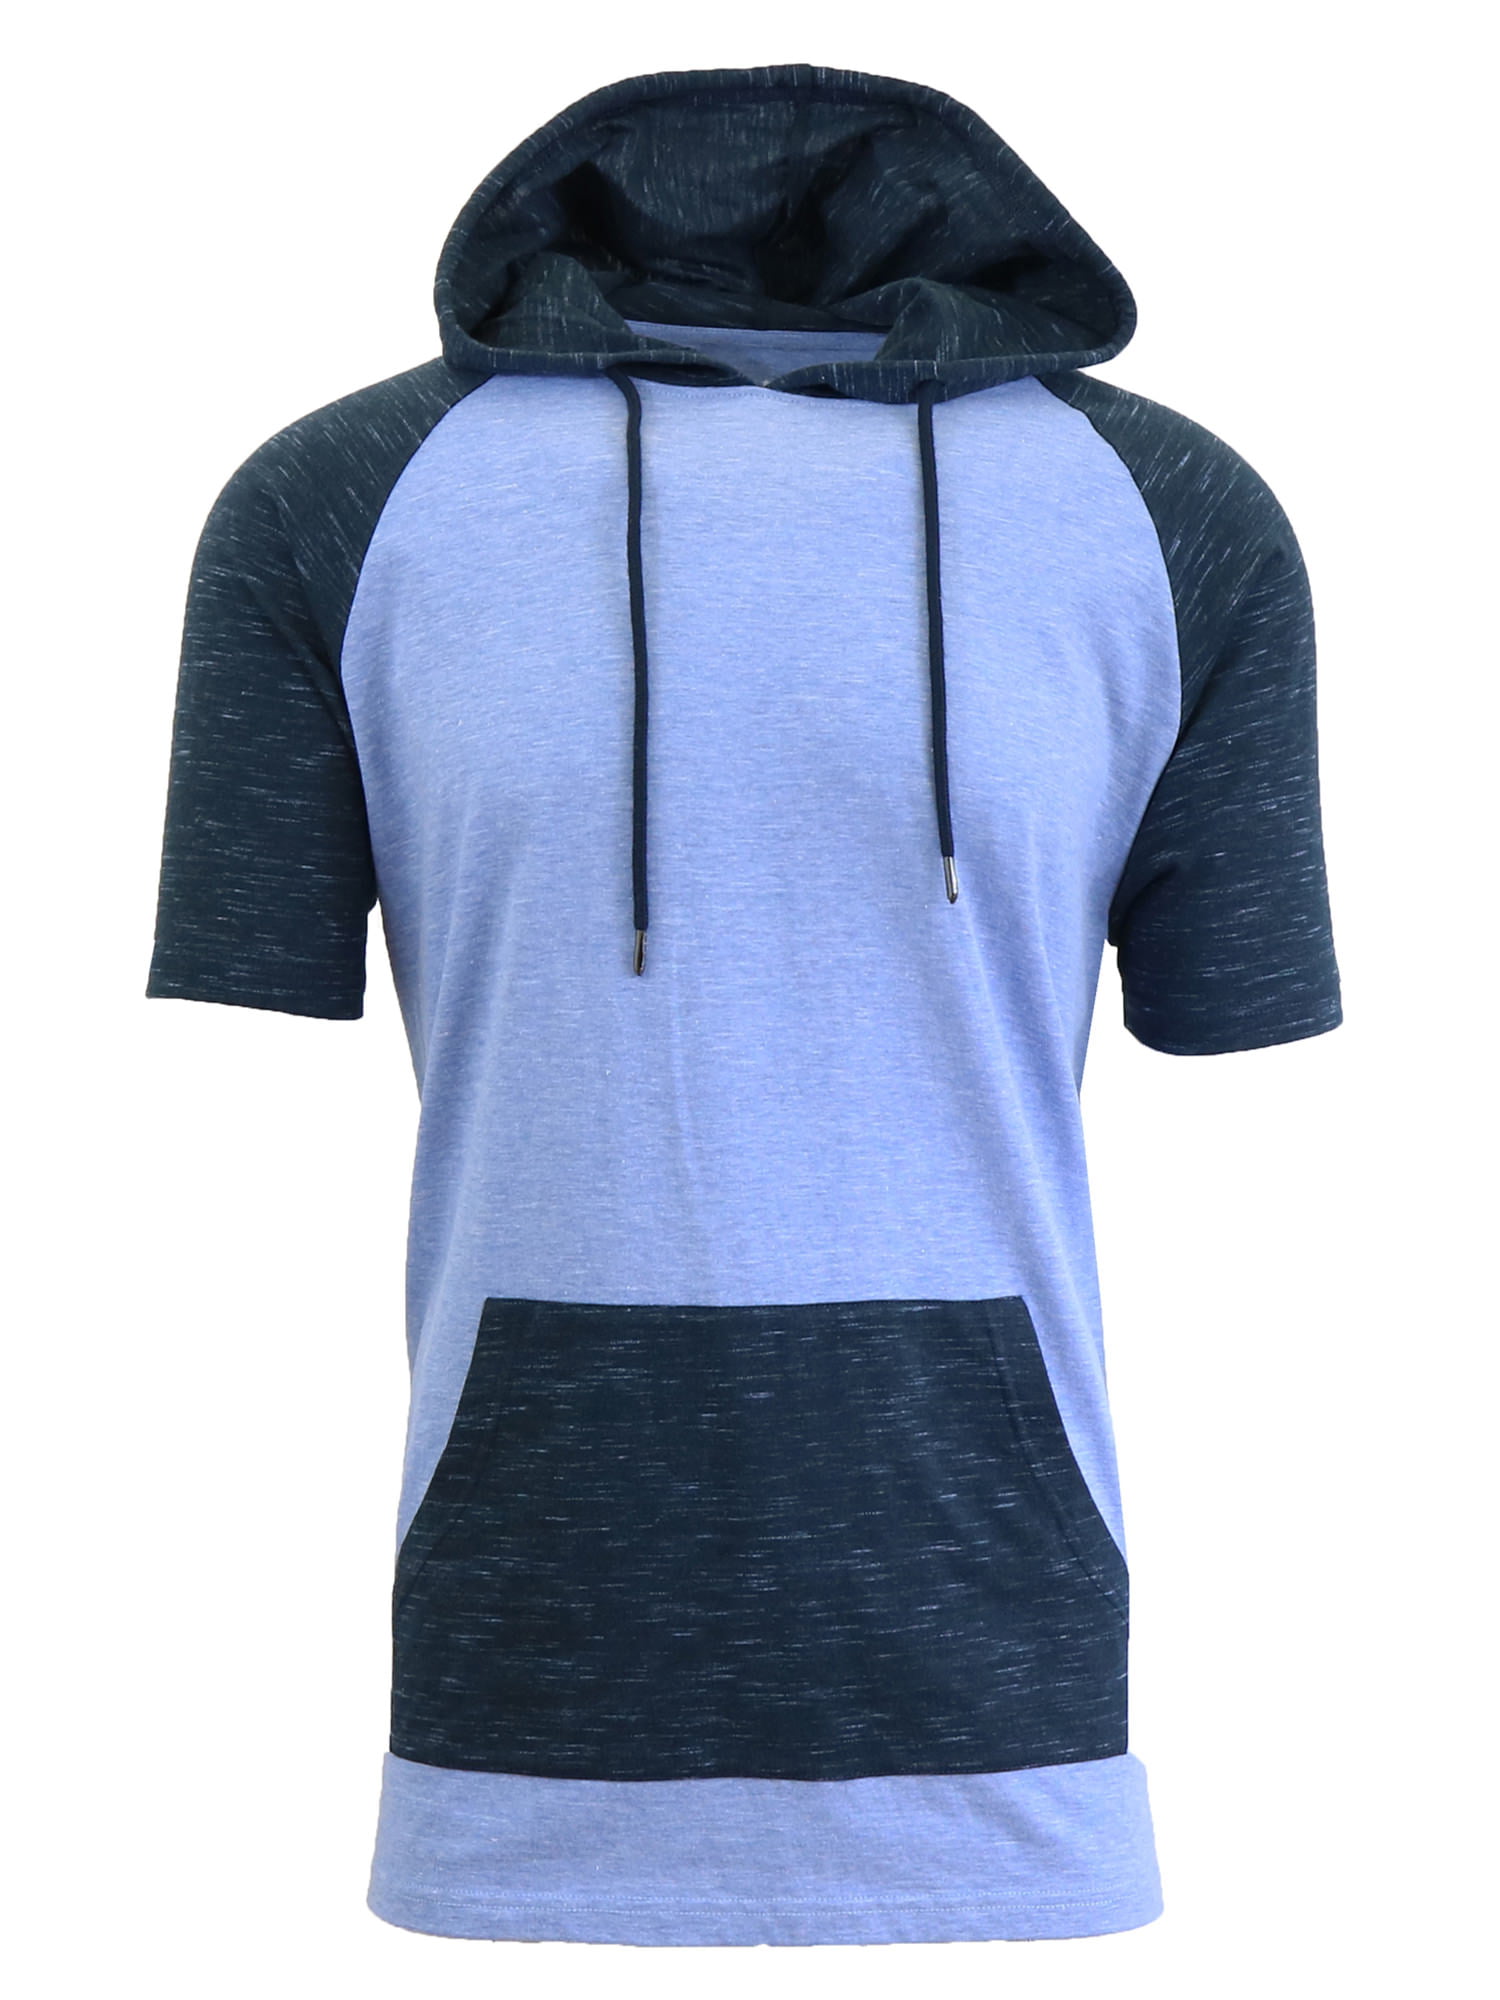 Men's Short Sleeve Pullover Hoodie With Kangaroo Pocket - Walmart.com